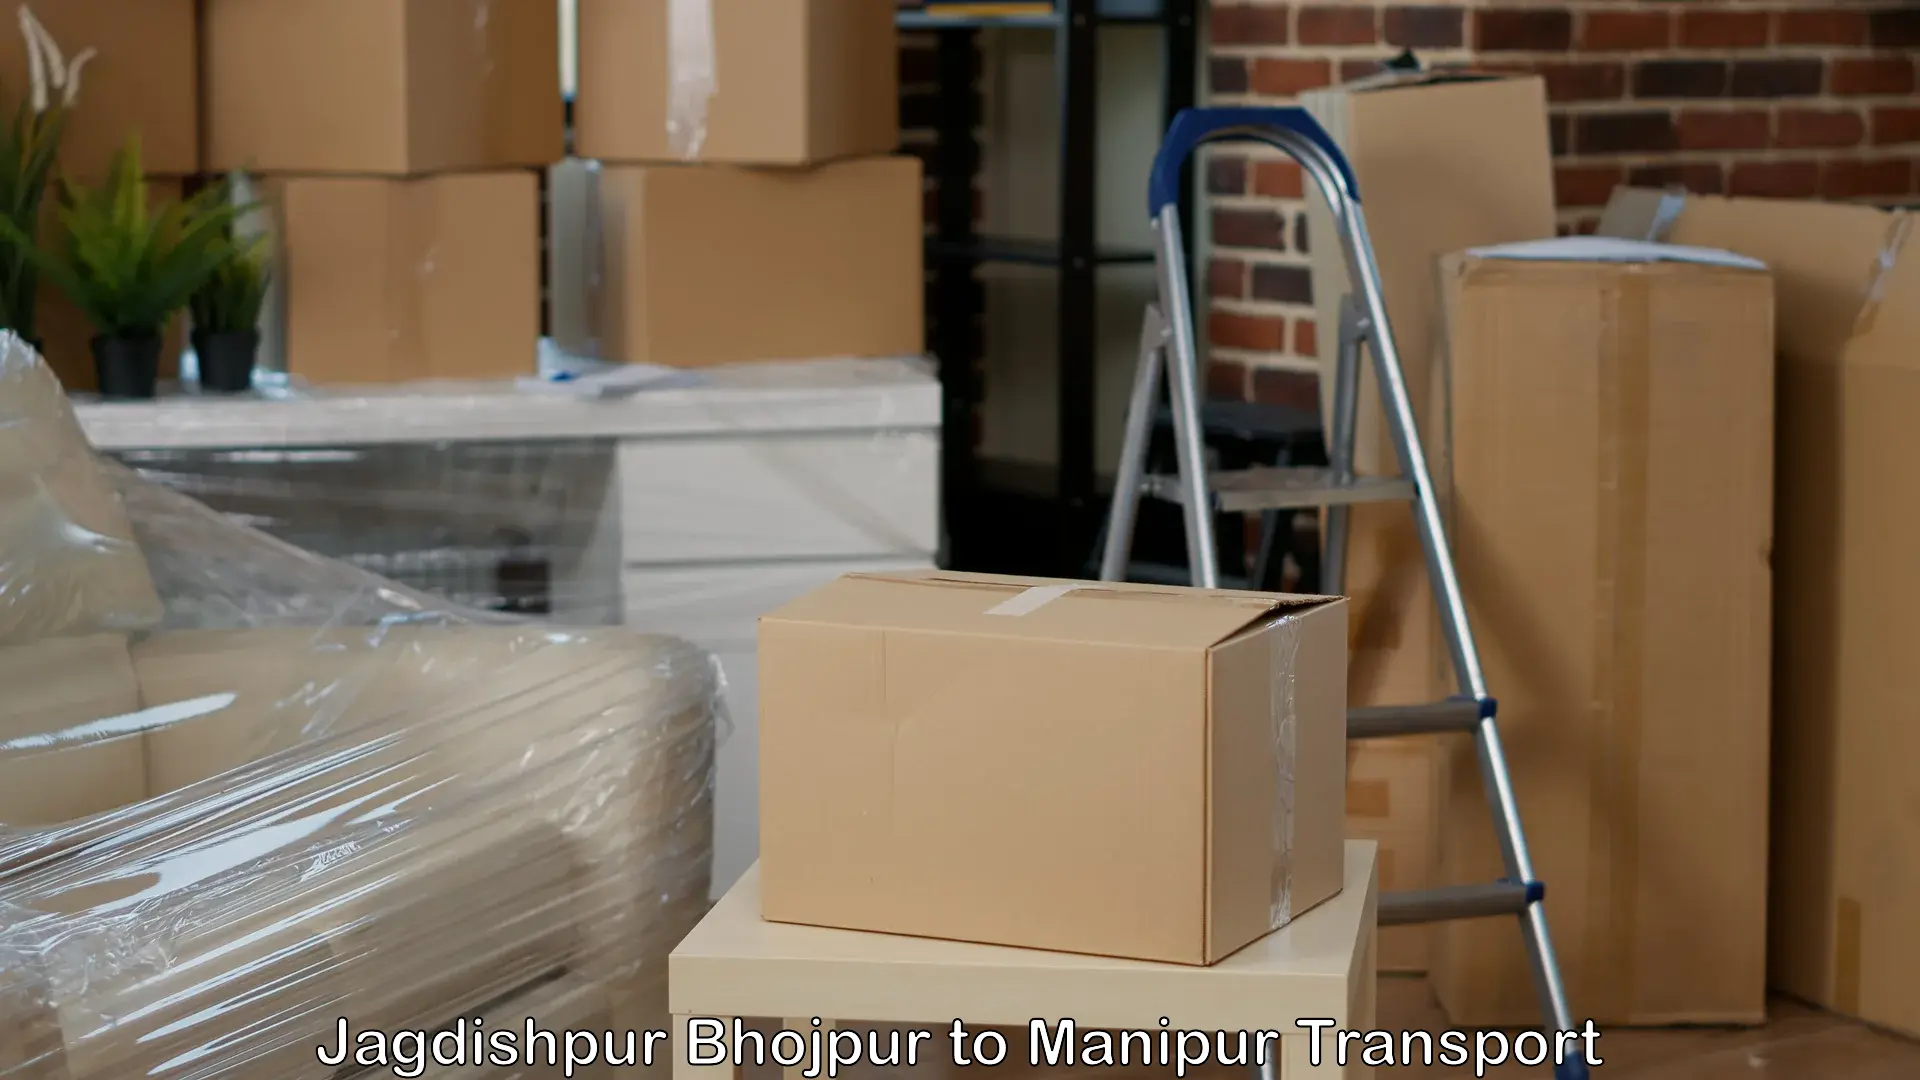 Furniture transport service Jagdishpur Bhojpur to Manipur